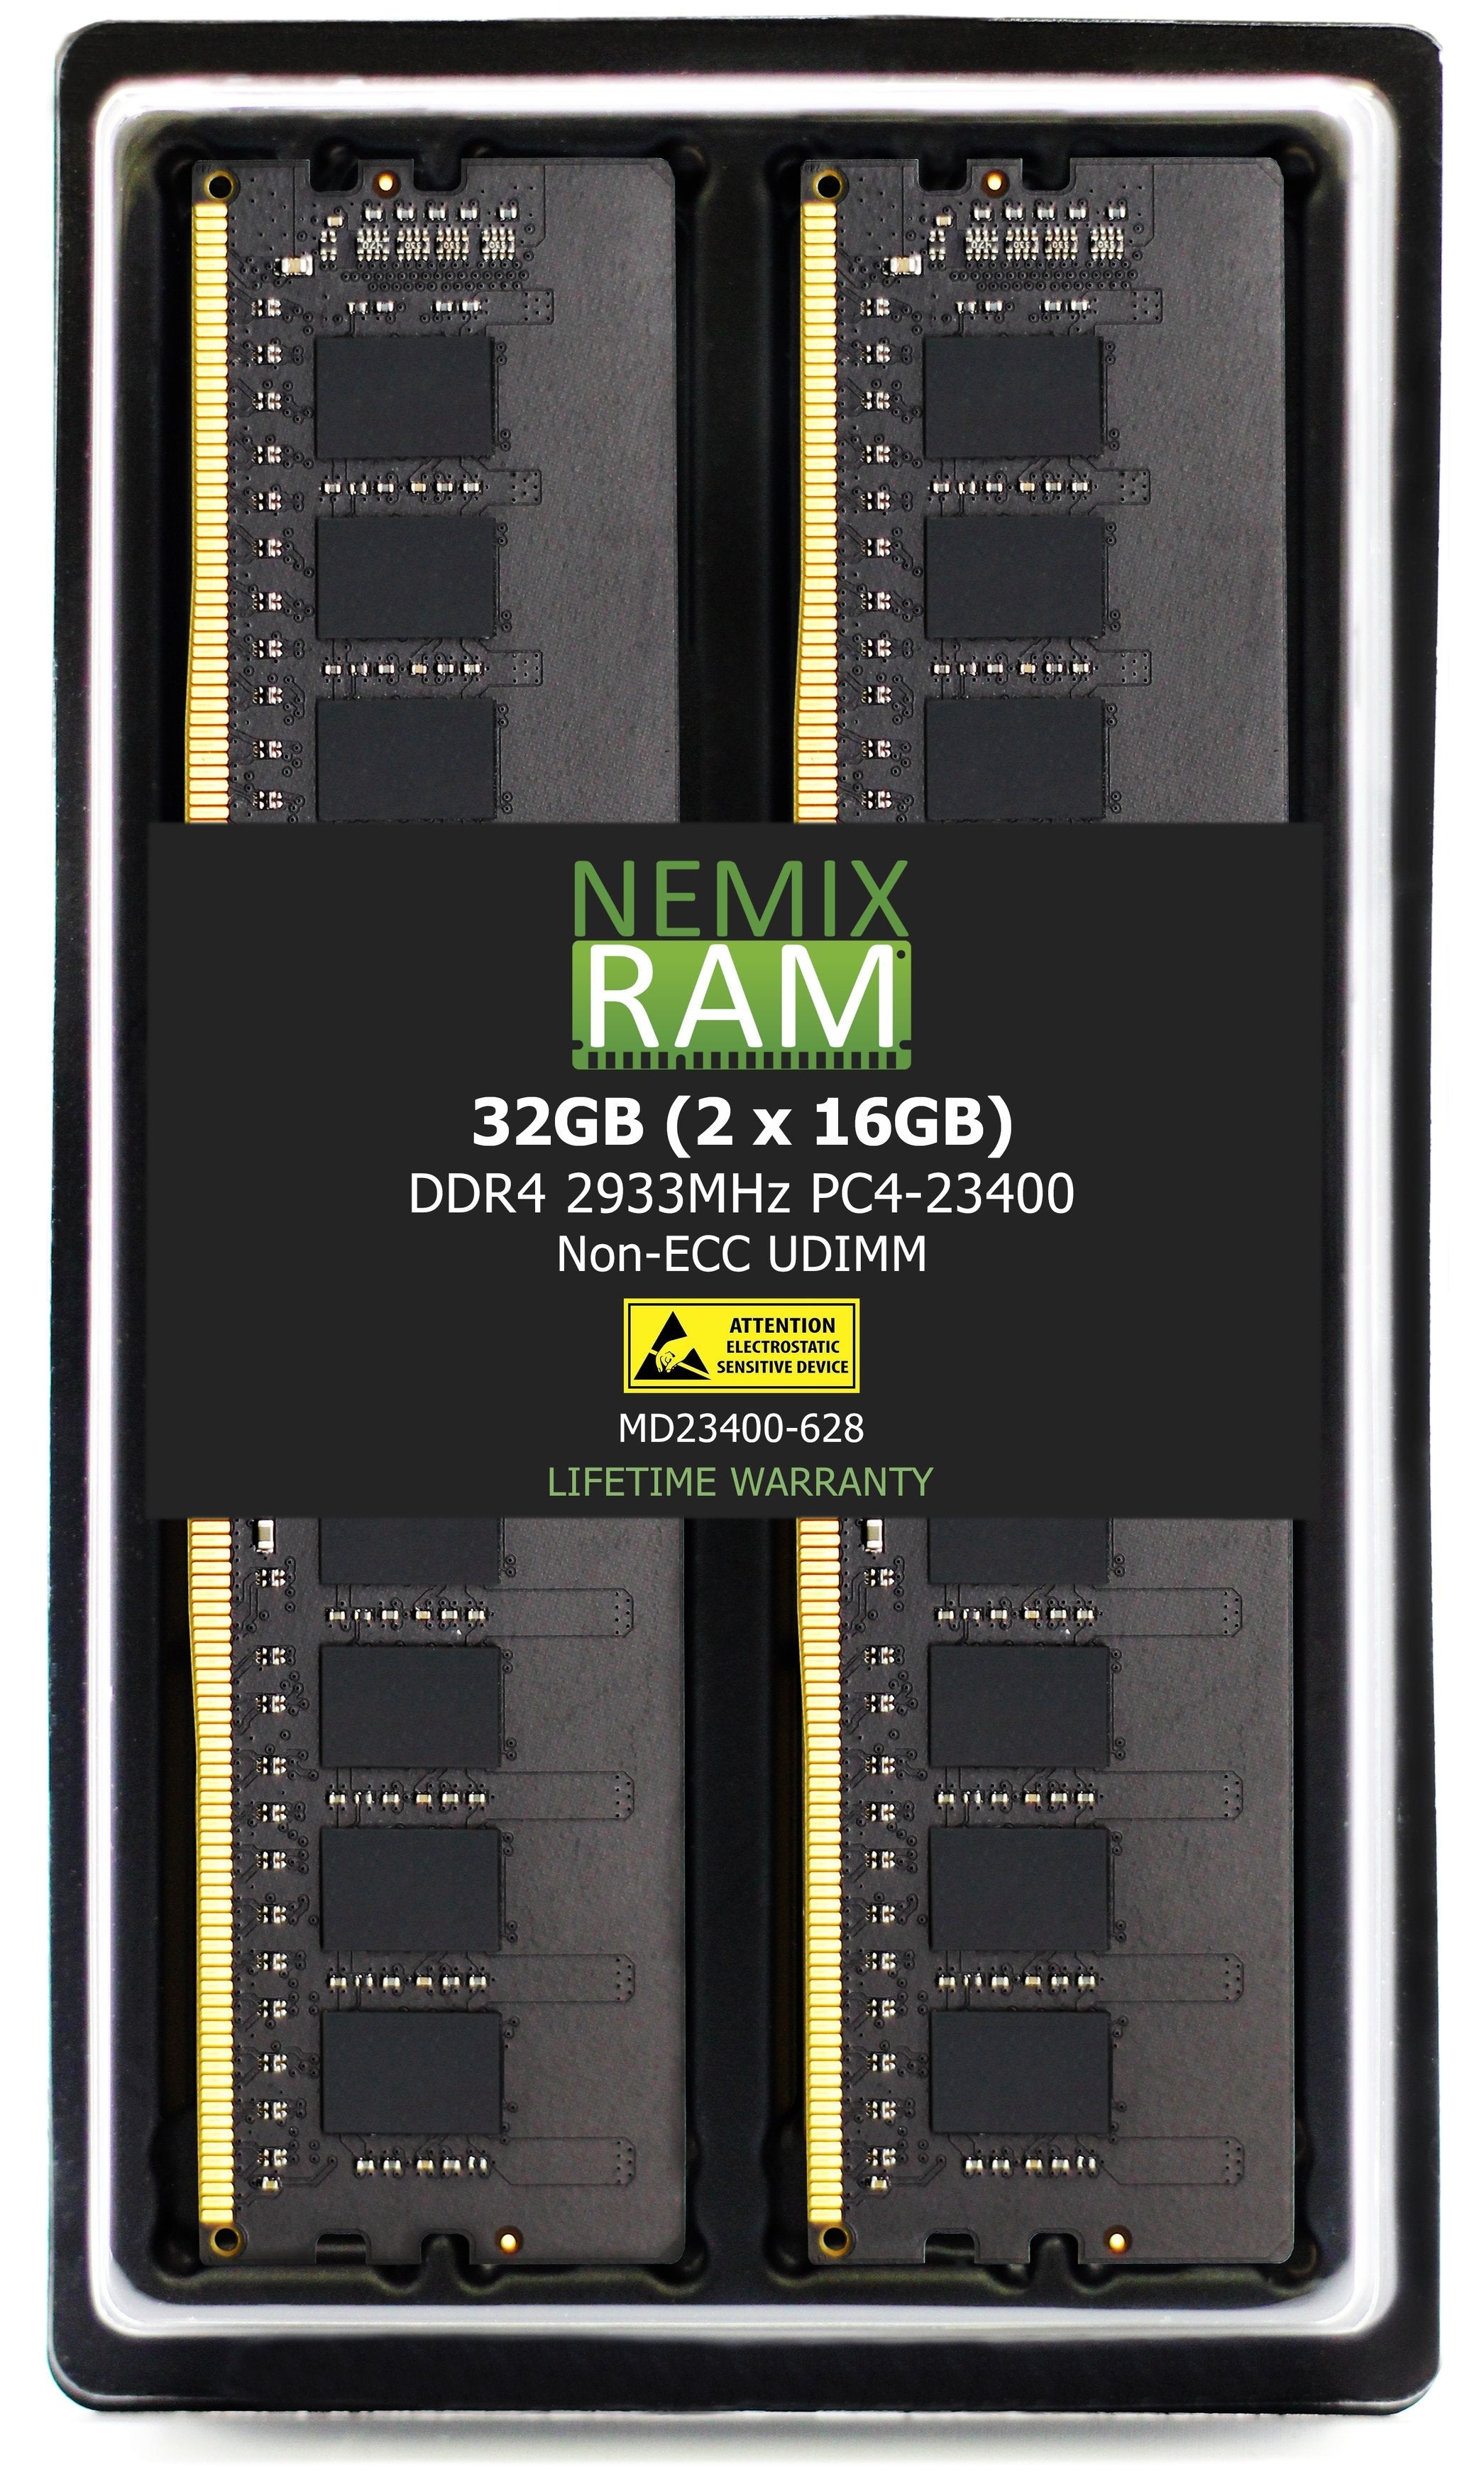 DDR4 2933MHZ PC4-23400 UDIMM 2RX8